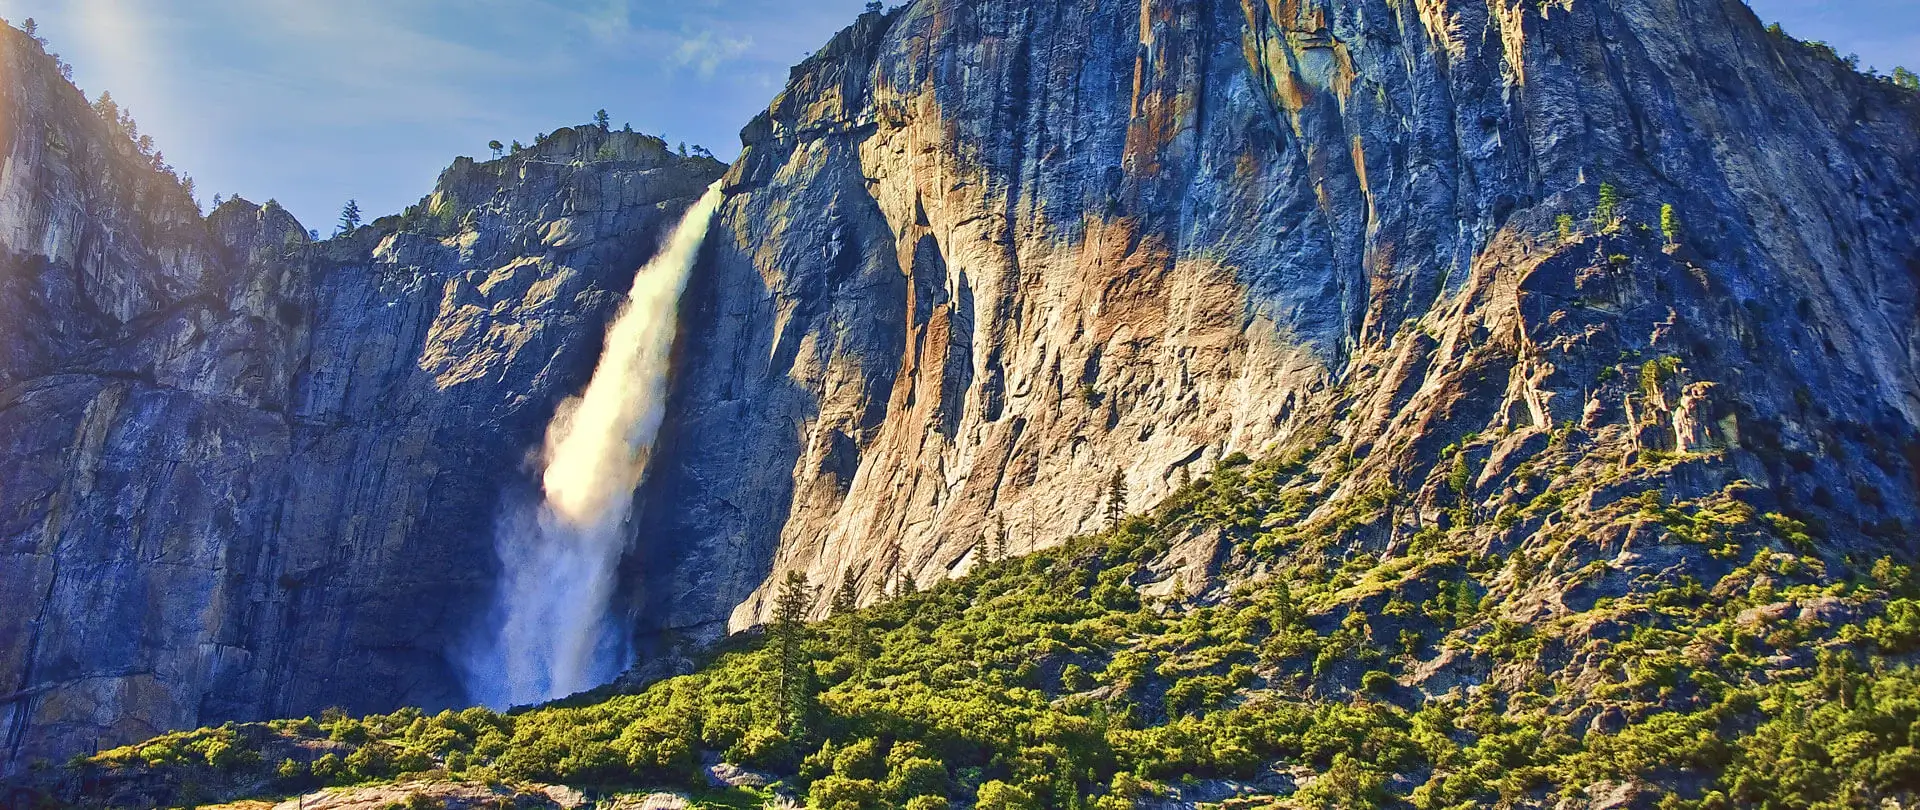 Yosemite Falls roaring in Spring